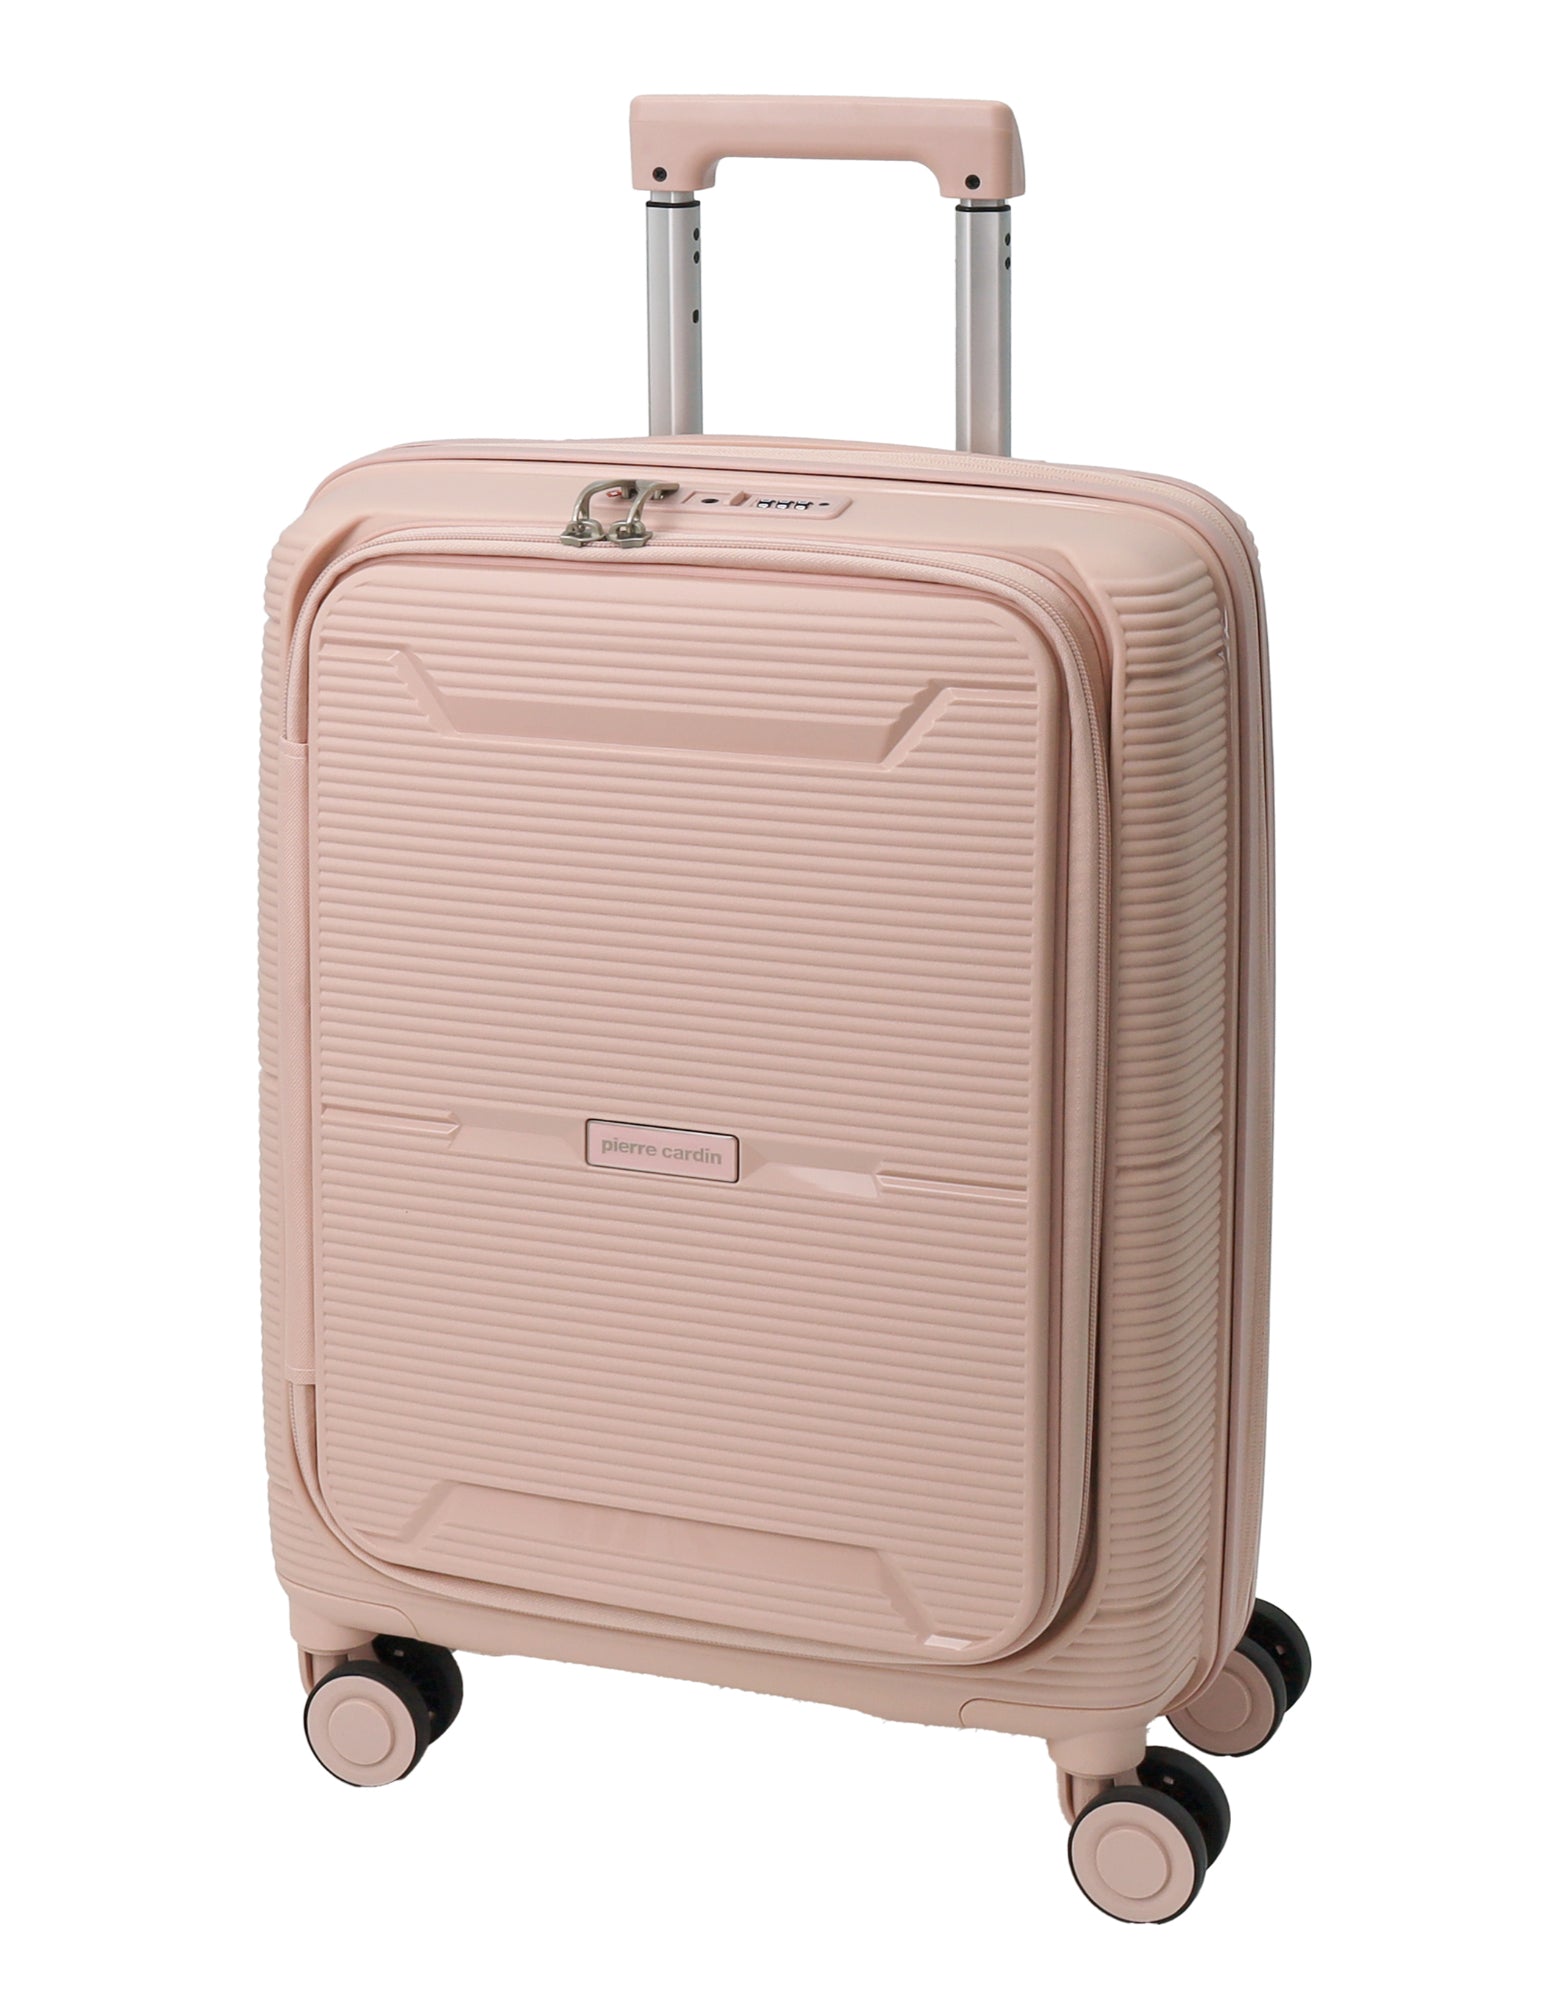 Pierre Cardin 54cm CABIN Hard Shell Suitcase in Blush